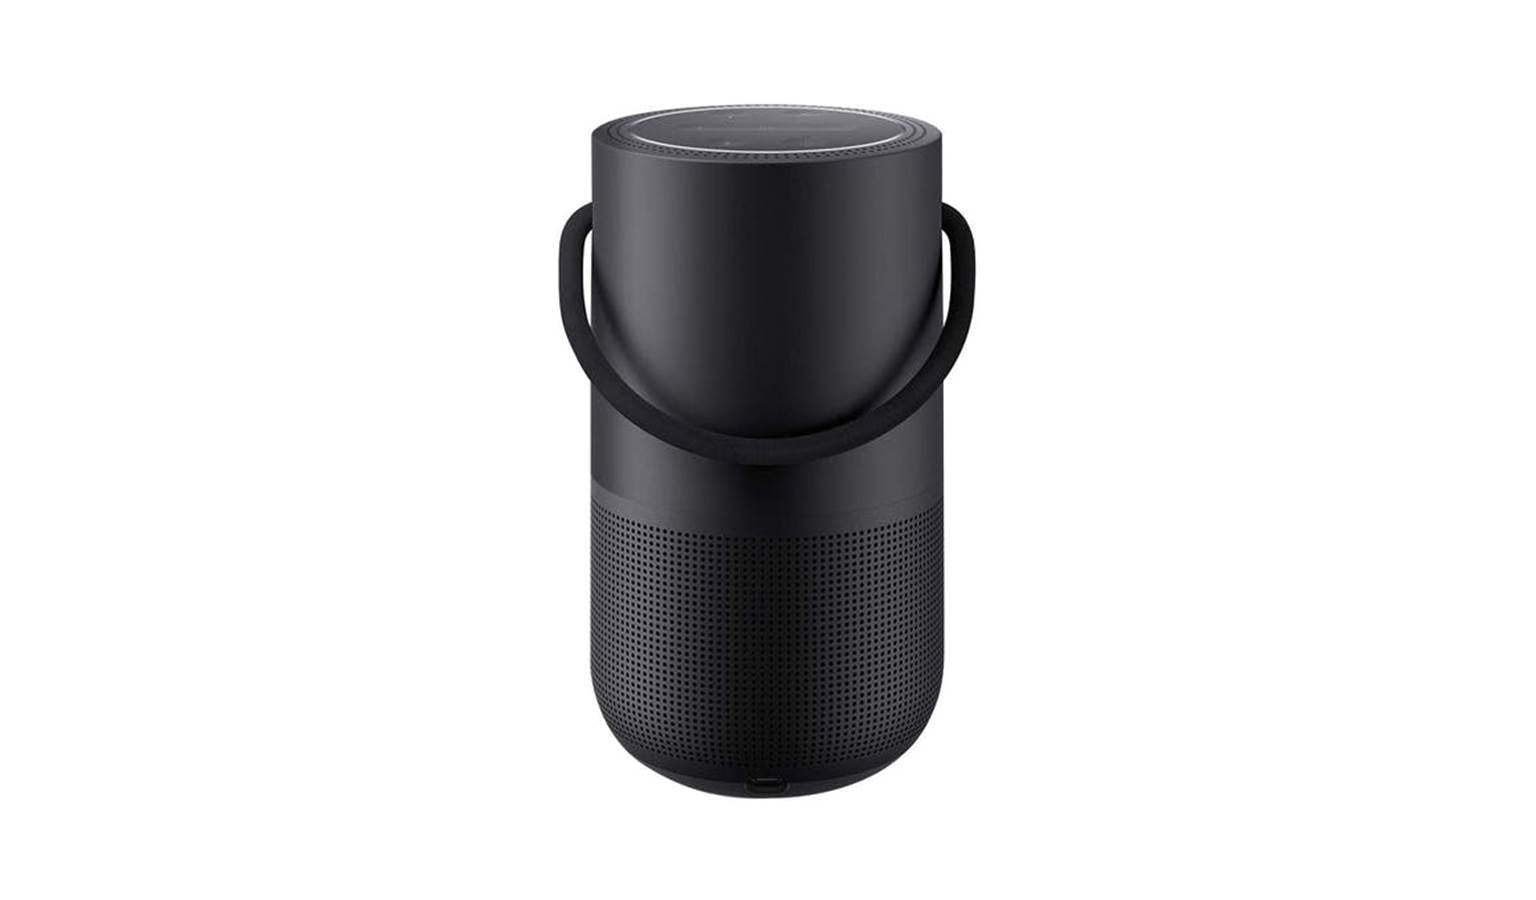  Bose Portable Smart Speaker — Wireless Bluetooth Speaker with  Alexa Voice Control Built-In, Black : Electronics